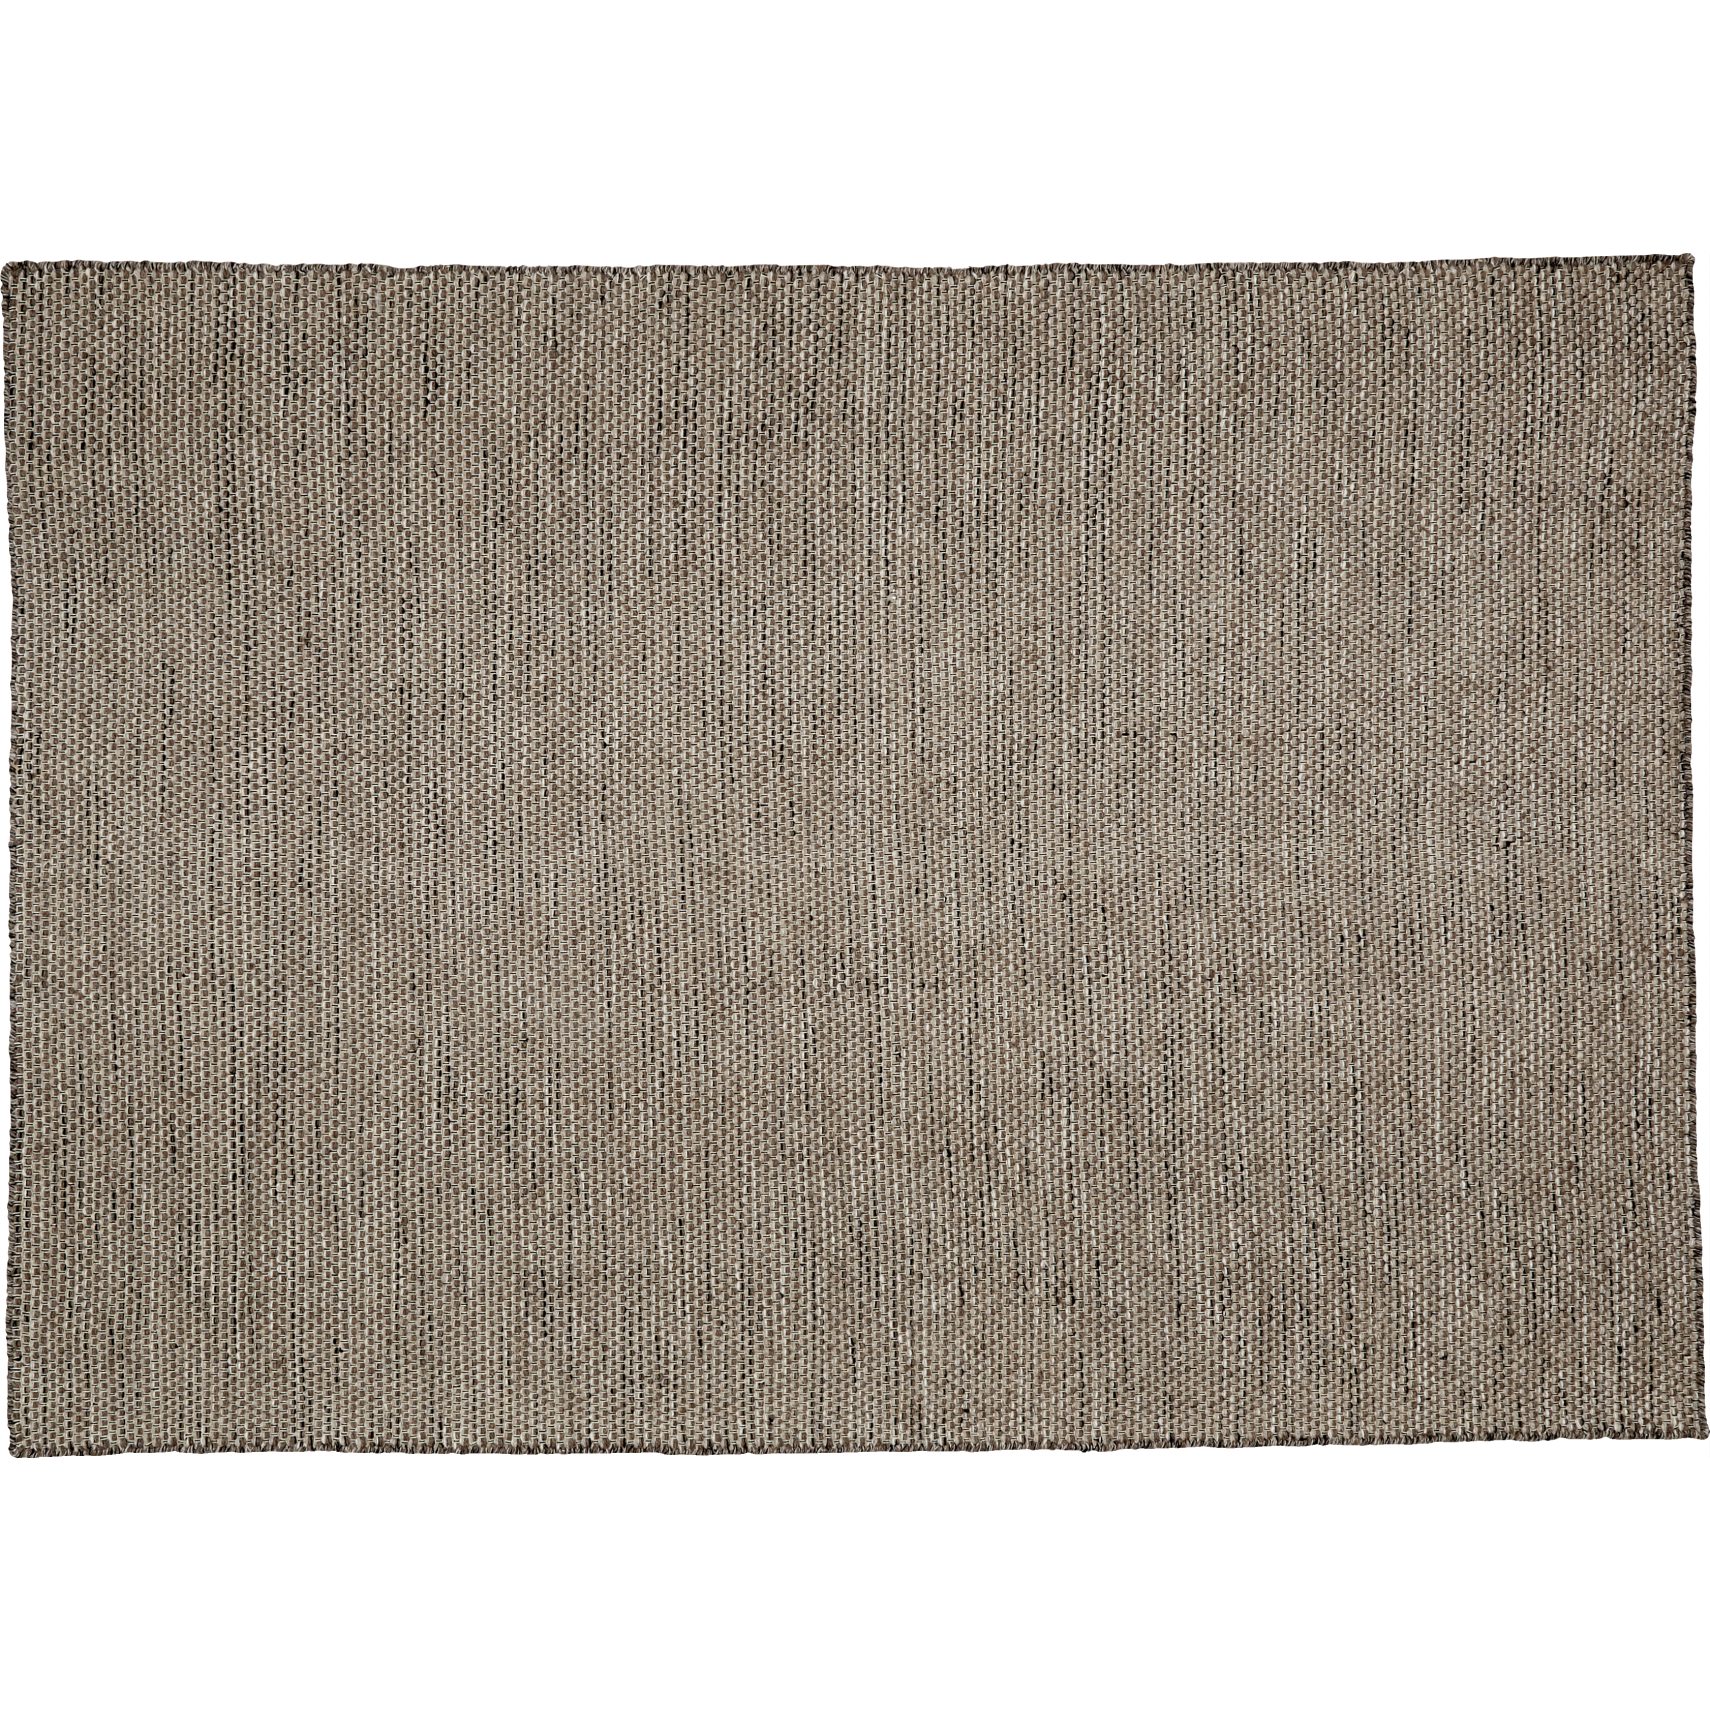 Gabi Kelimmatta 160 x 230 cm - Brun ull och offwhite/svart mönster